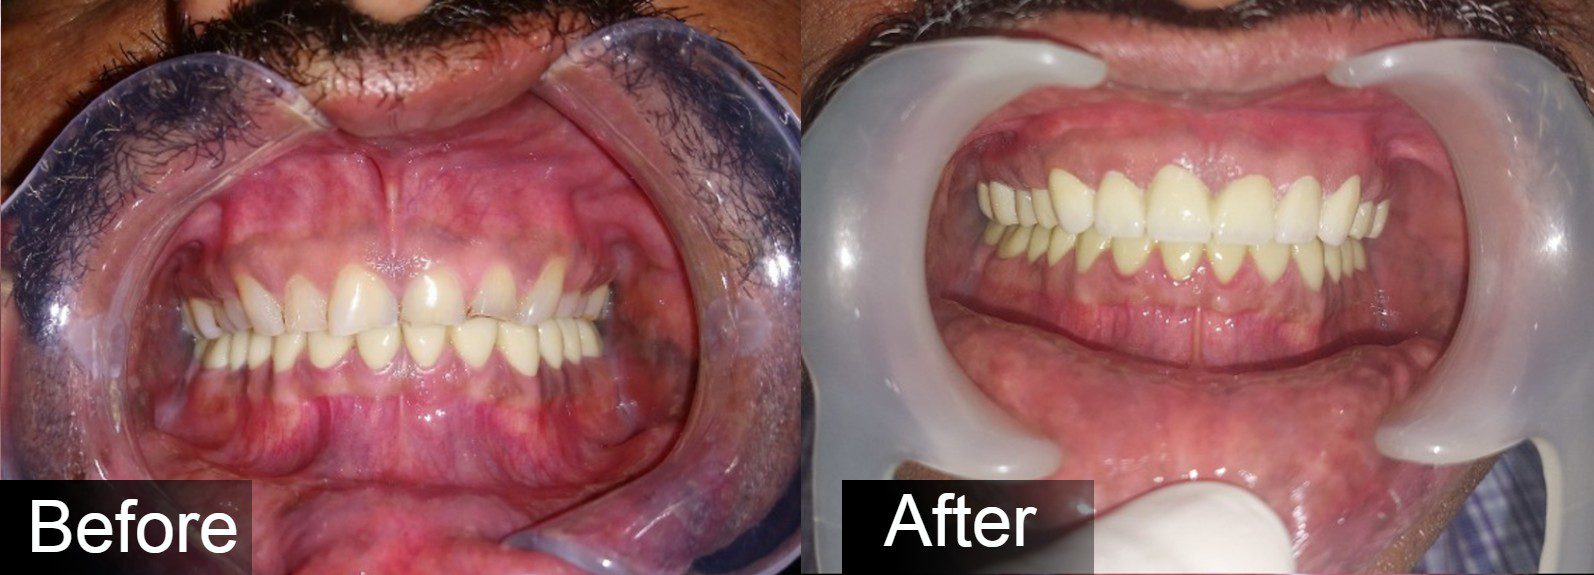 Full Mouth Rehabilitation Images01